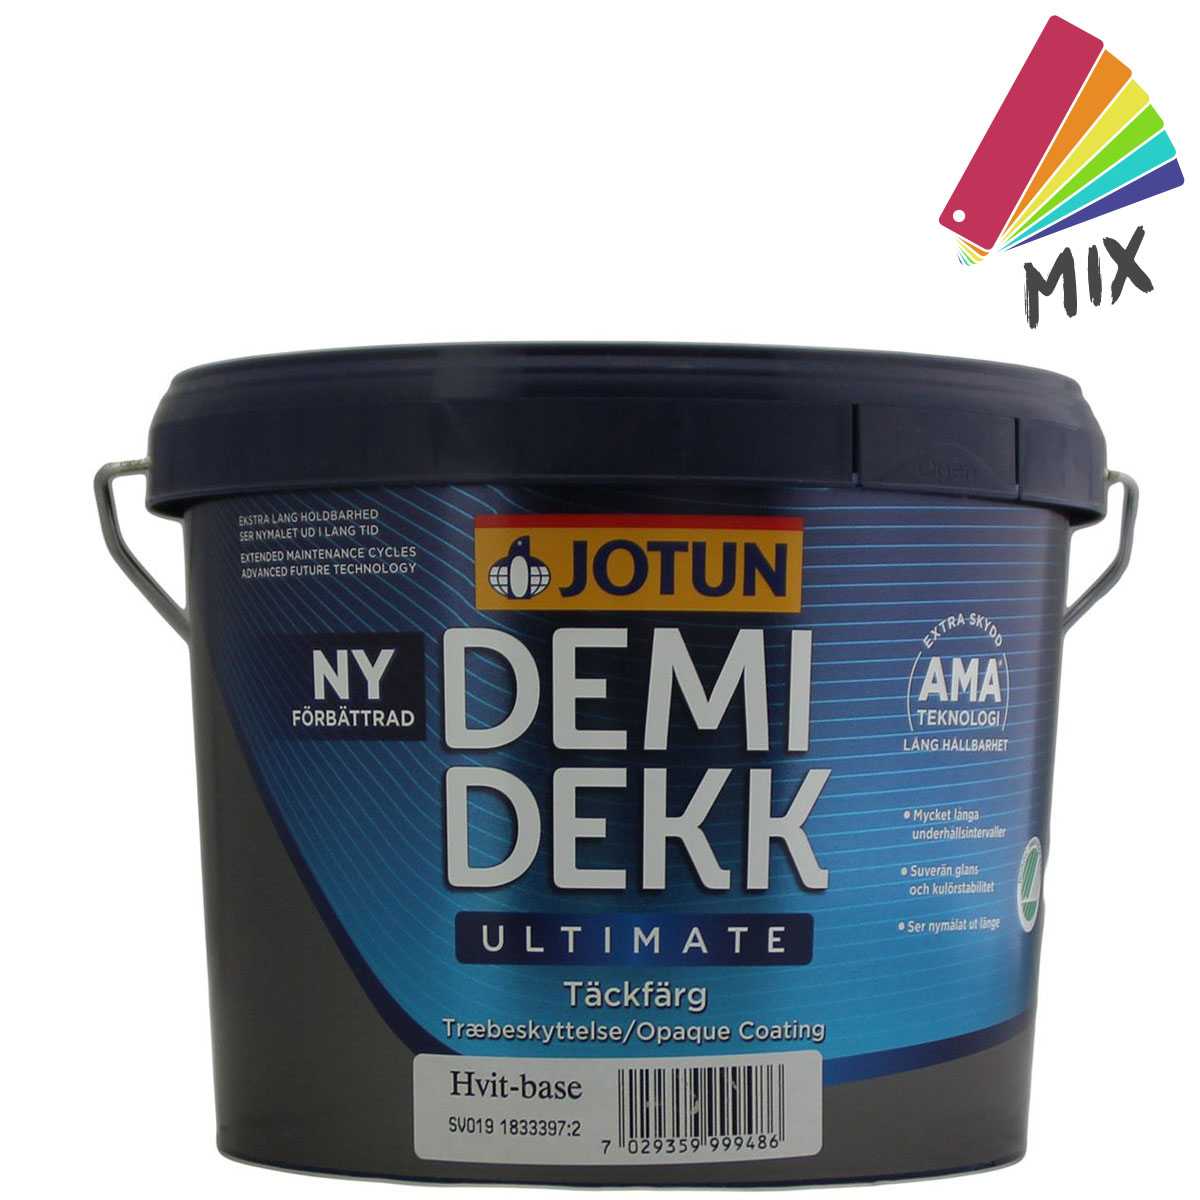 Jotun Demidekk Ultimate TÄCKFÄRG 3L MIX, Deckfarbe